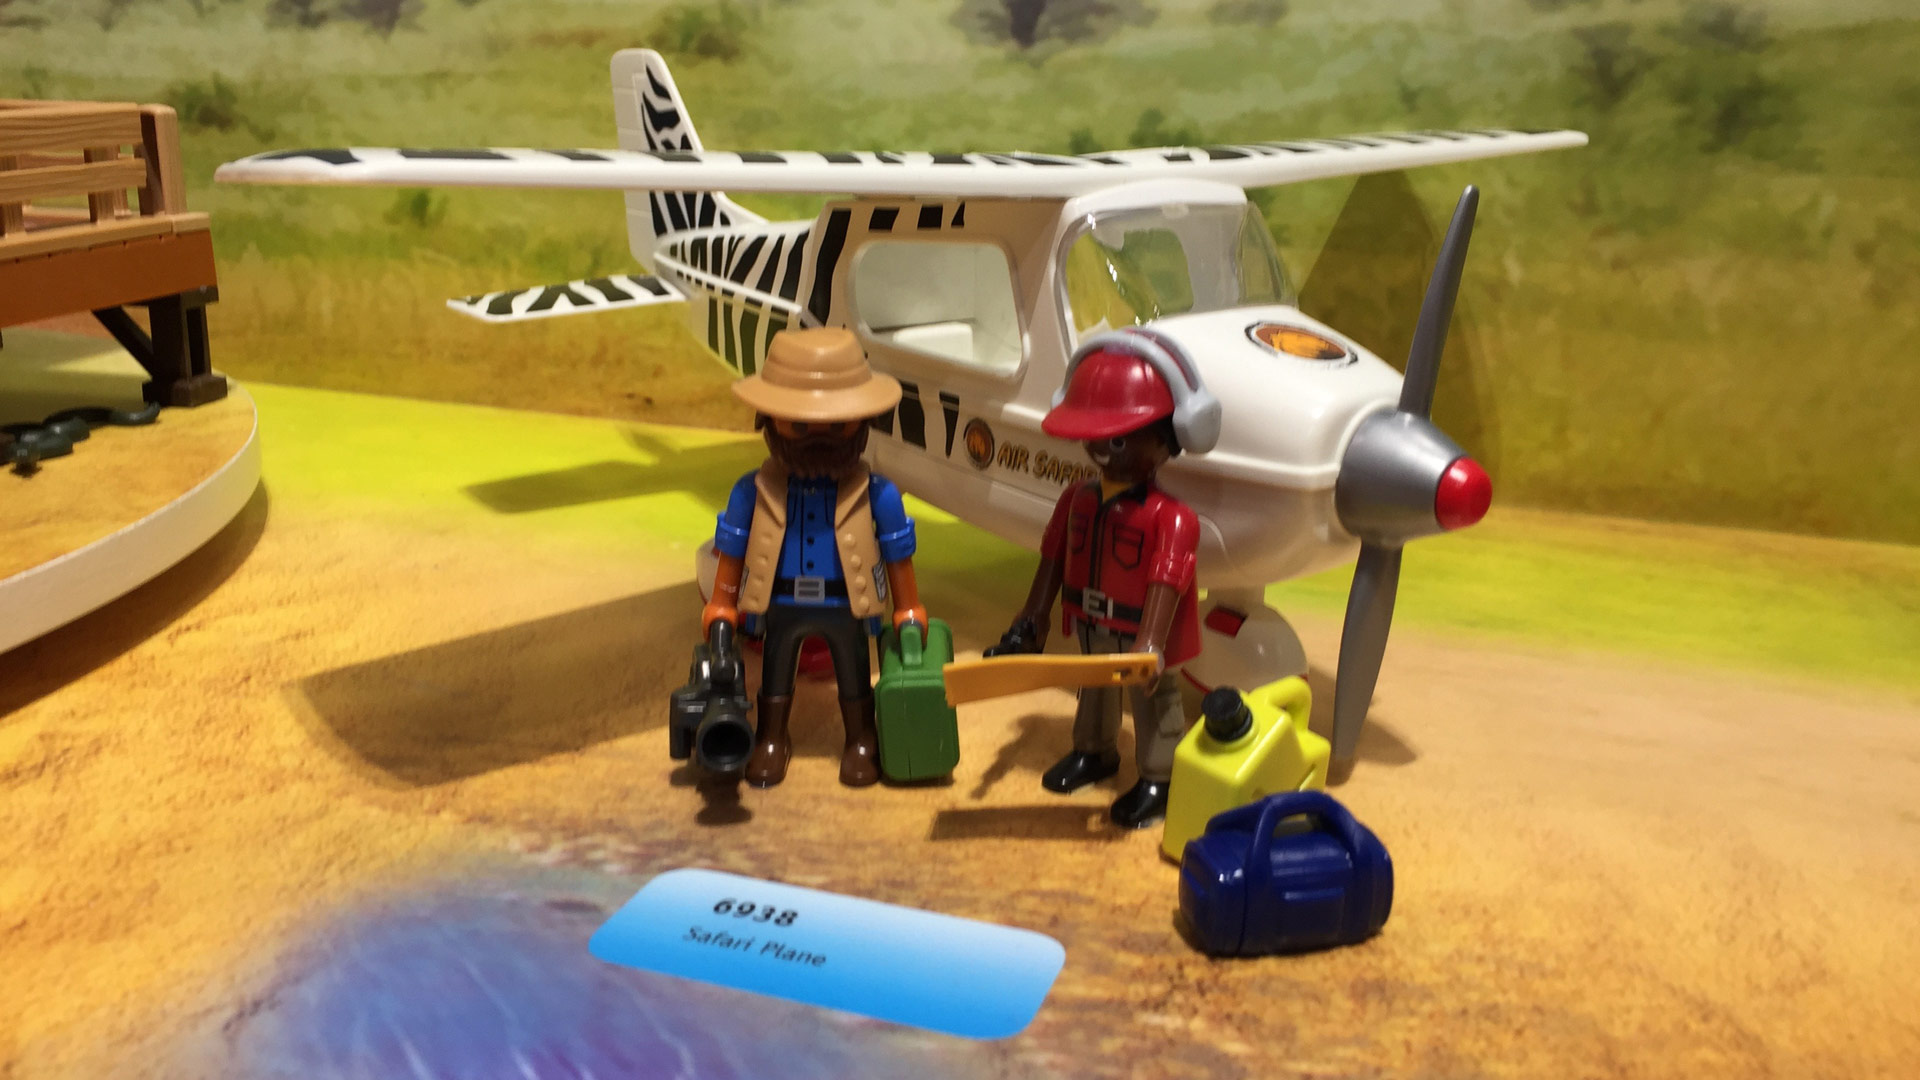 Playmobil Wildlife Set 6938 Safari Plane at Toy Fair 2017